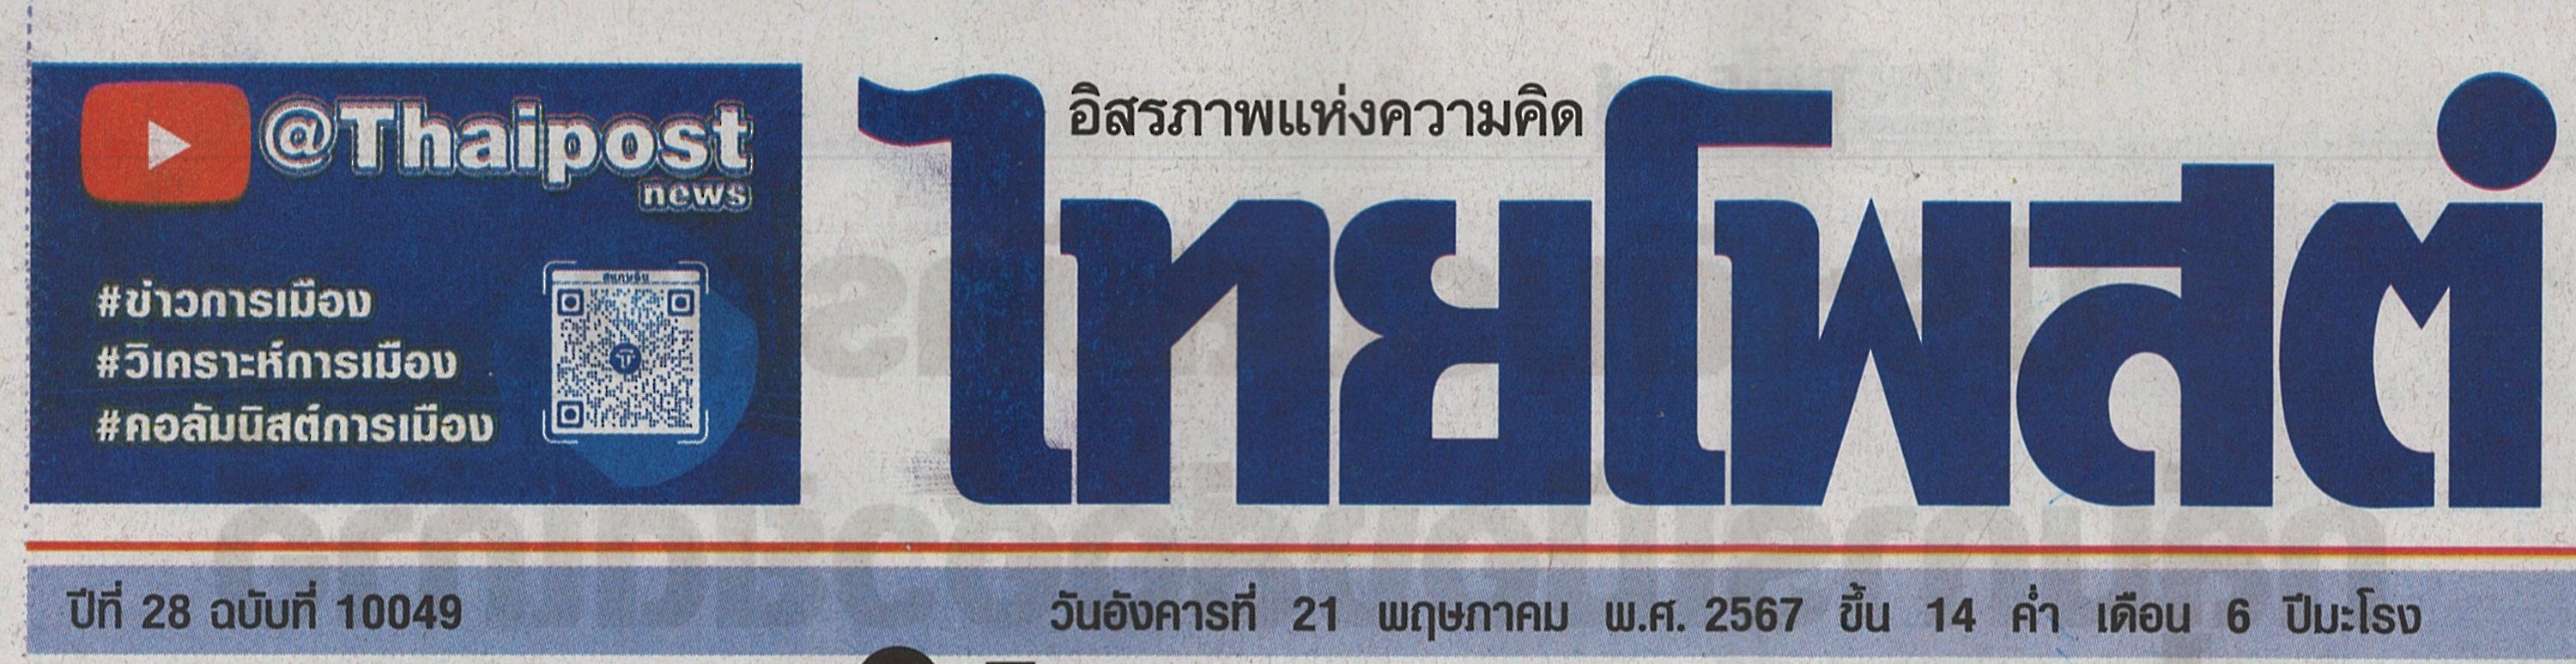 thaipost10049.1